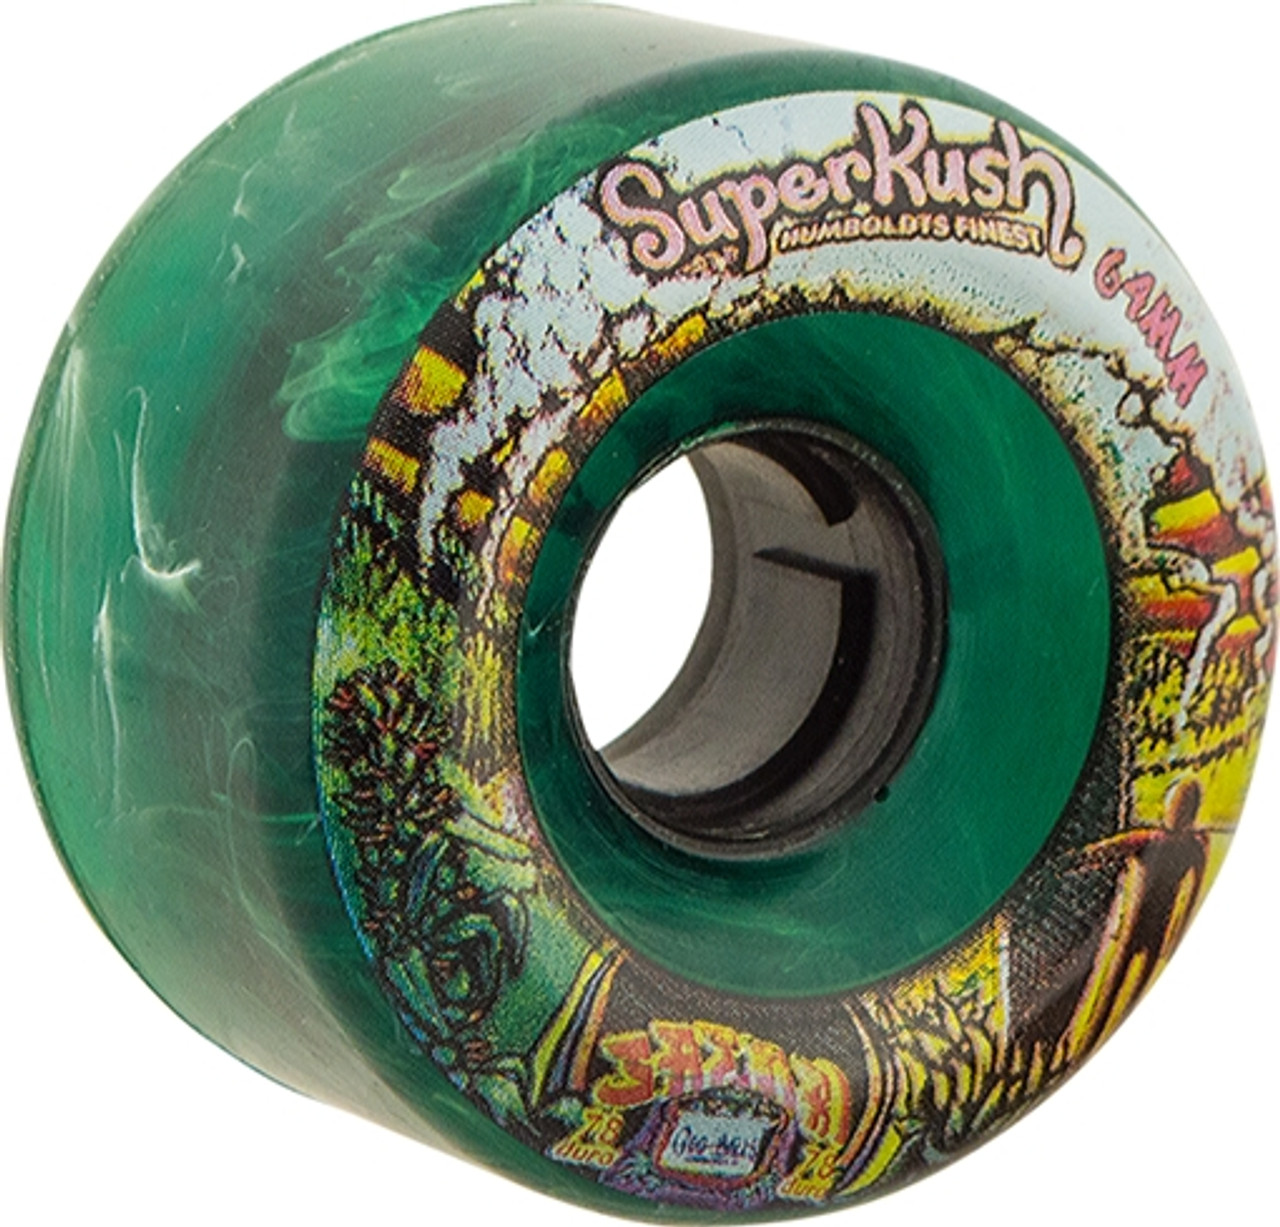 SATORI GOO BALL SUPERKUSH 64mm 78a CLR.GREEN Skateboard Wheels